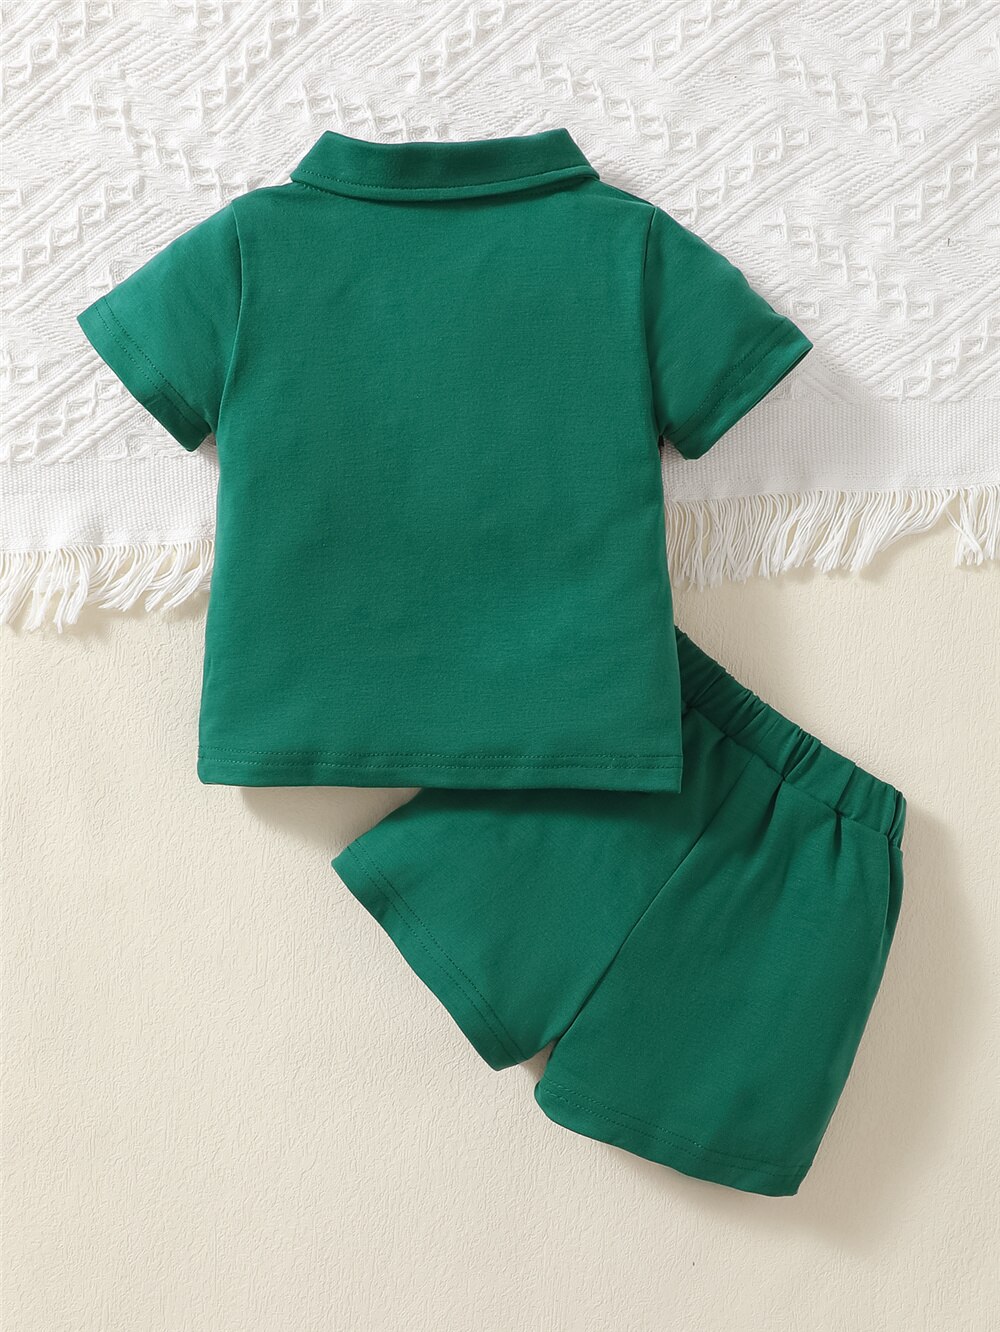 3-24Months-Infant-Baby-Boy-Clothing-Set-Short-Sleeves-Green-T-shirt-Shorts-2PCS-Costume-Newborn-1